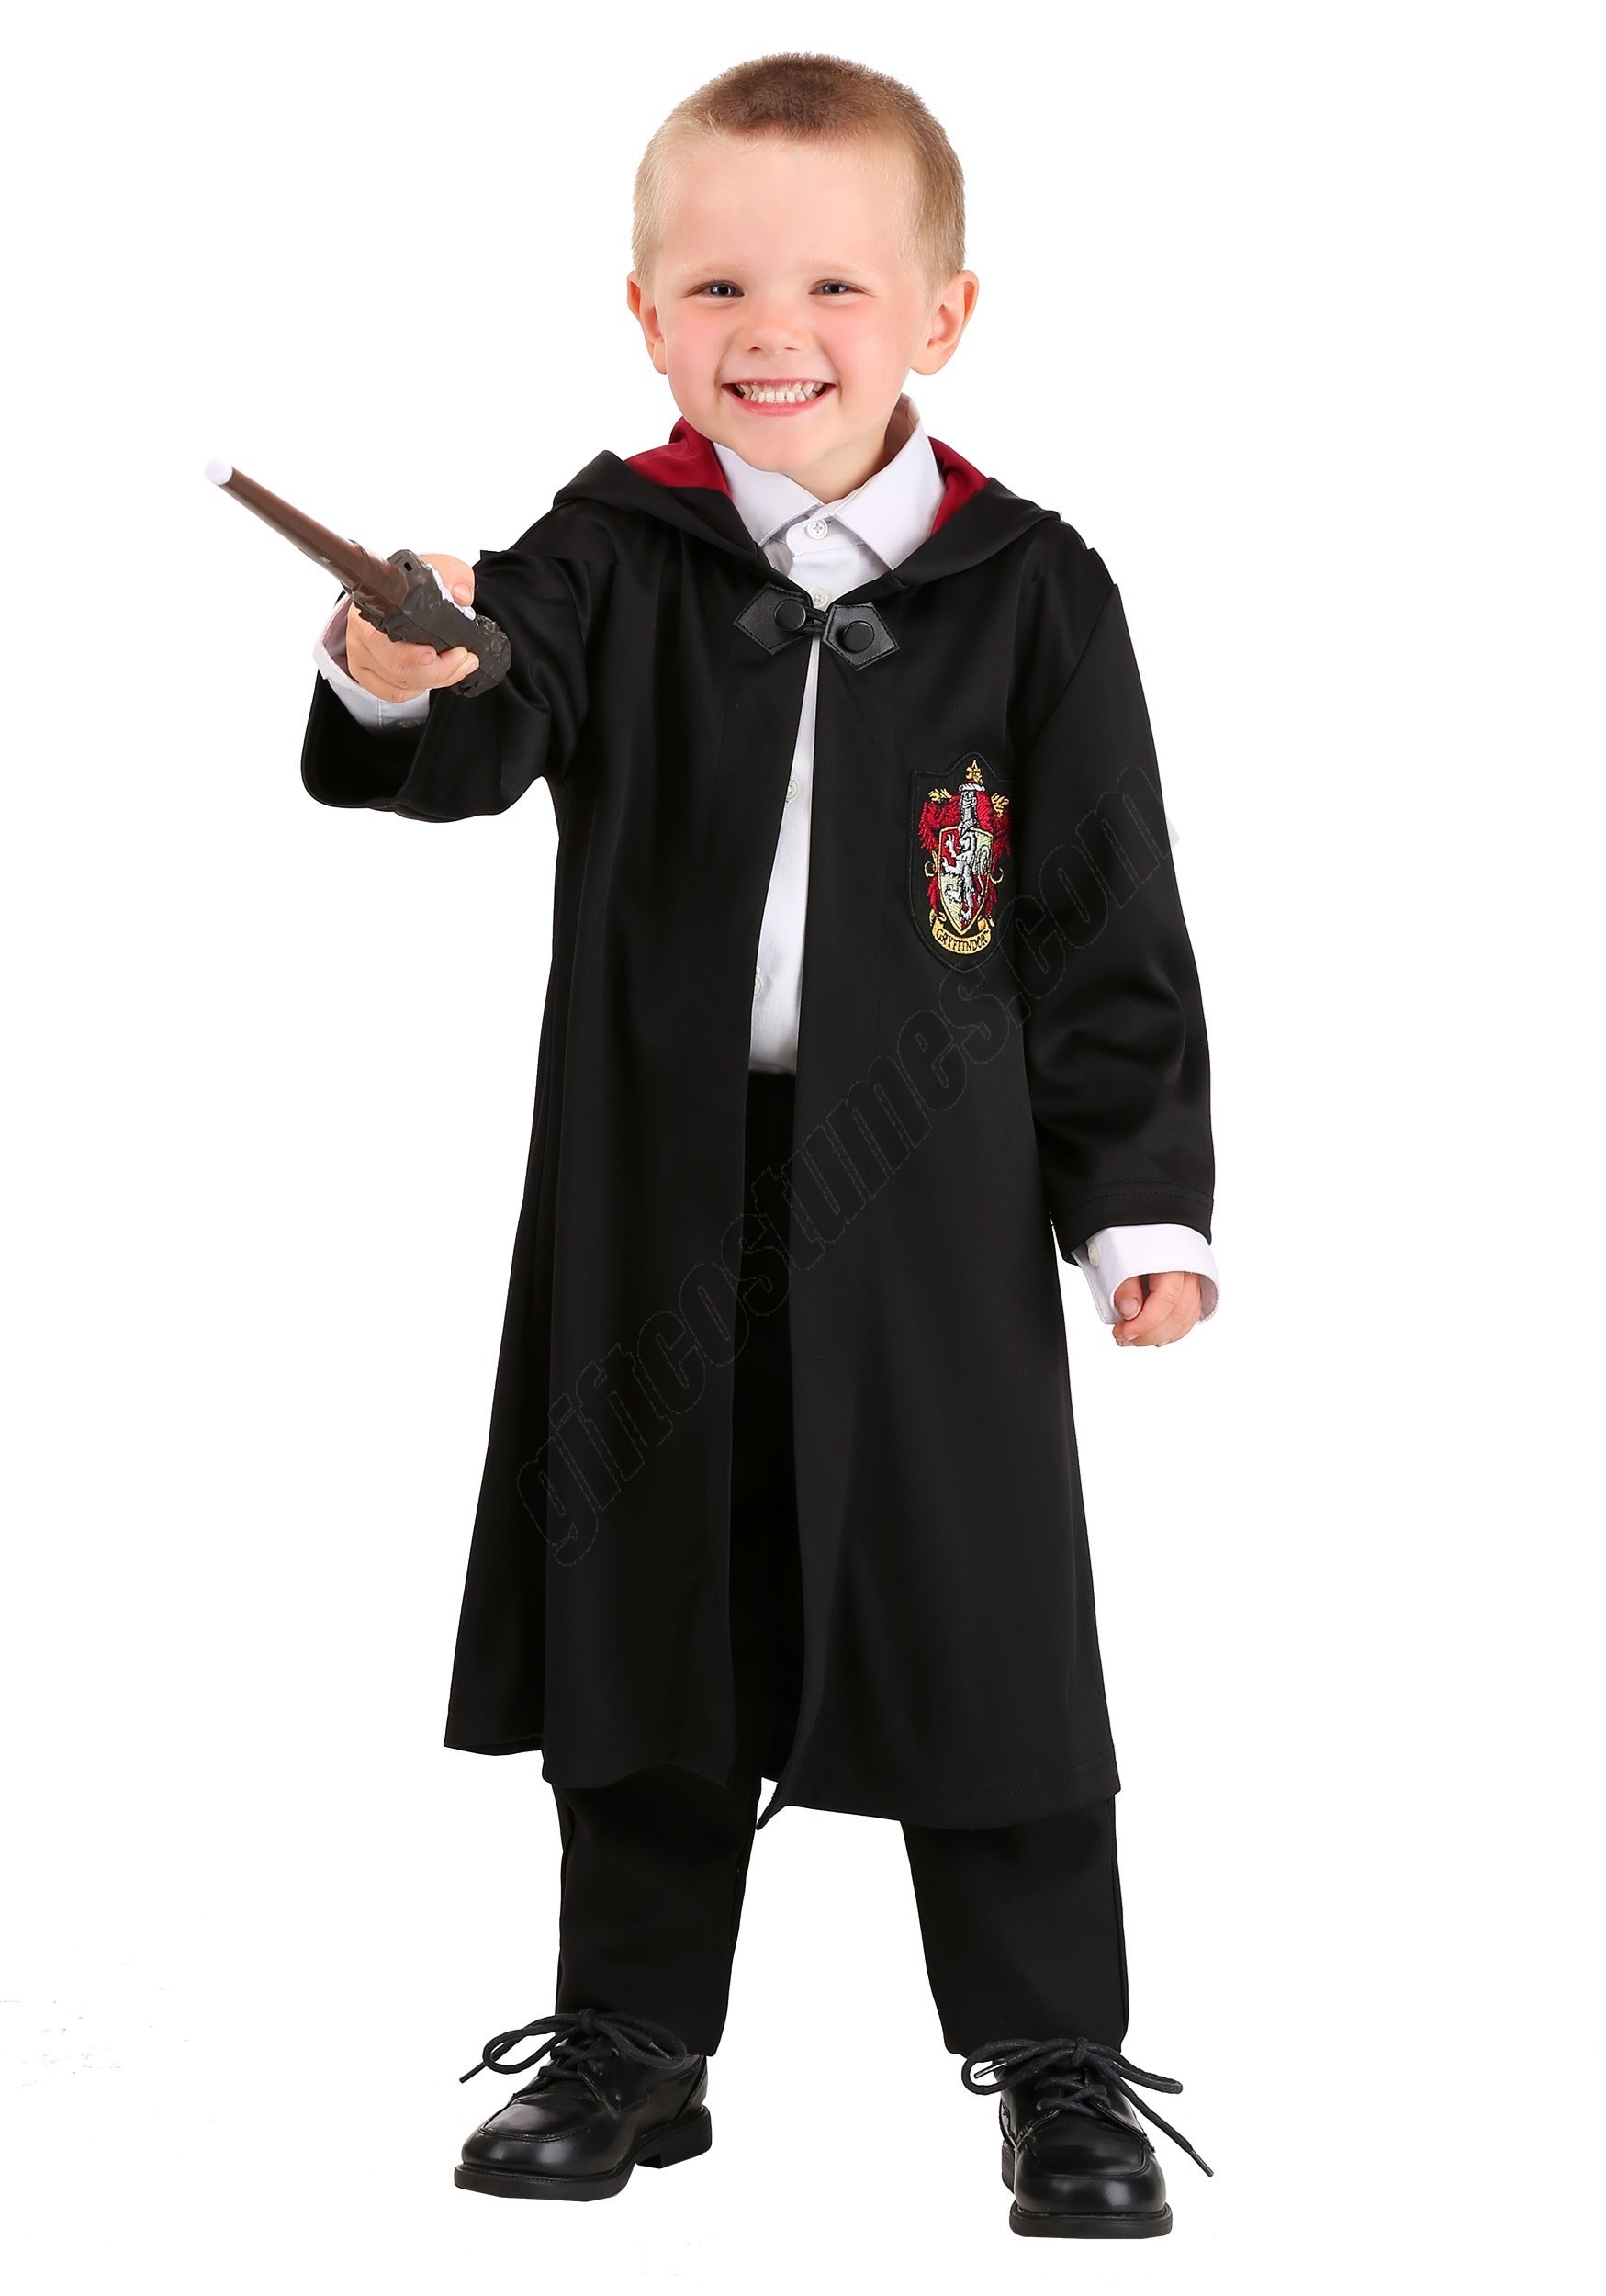 Toddler's Harry Potter Gryffindor Robe Costume Promotions - Toddler's Harry Potter Gryffindor Robe Costume Promotions